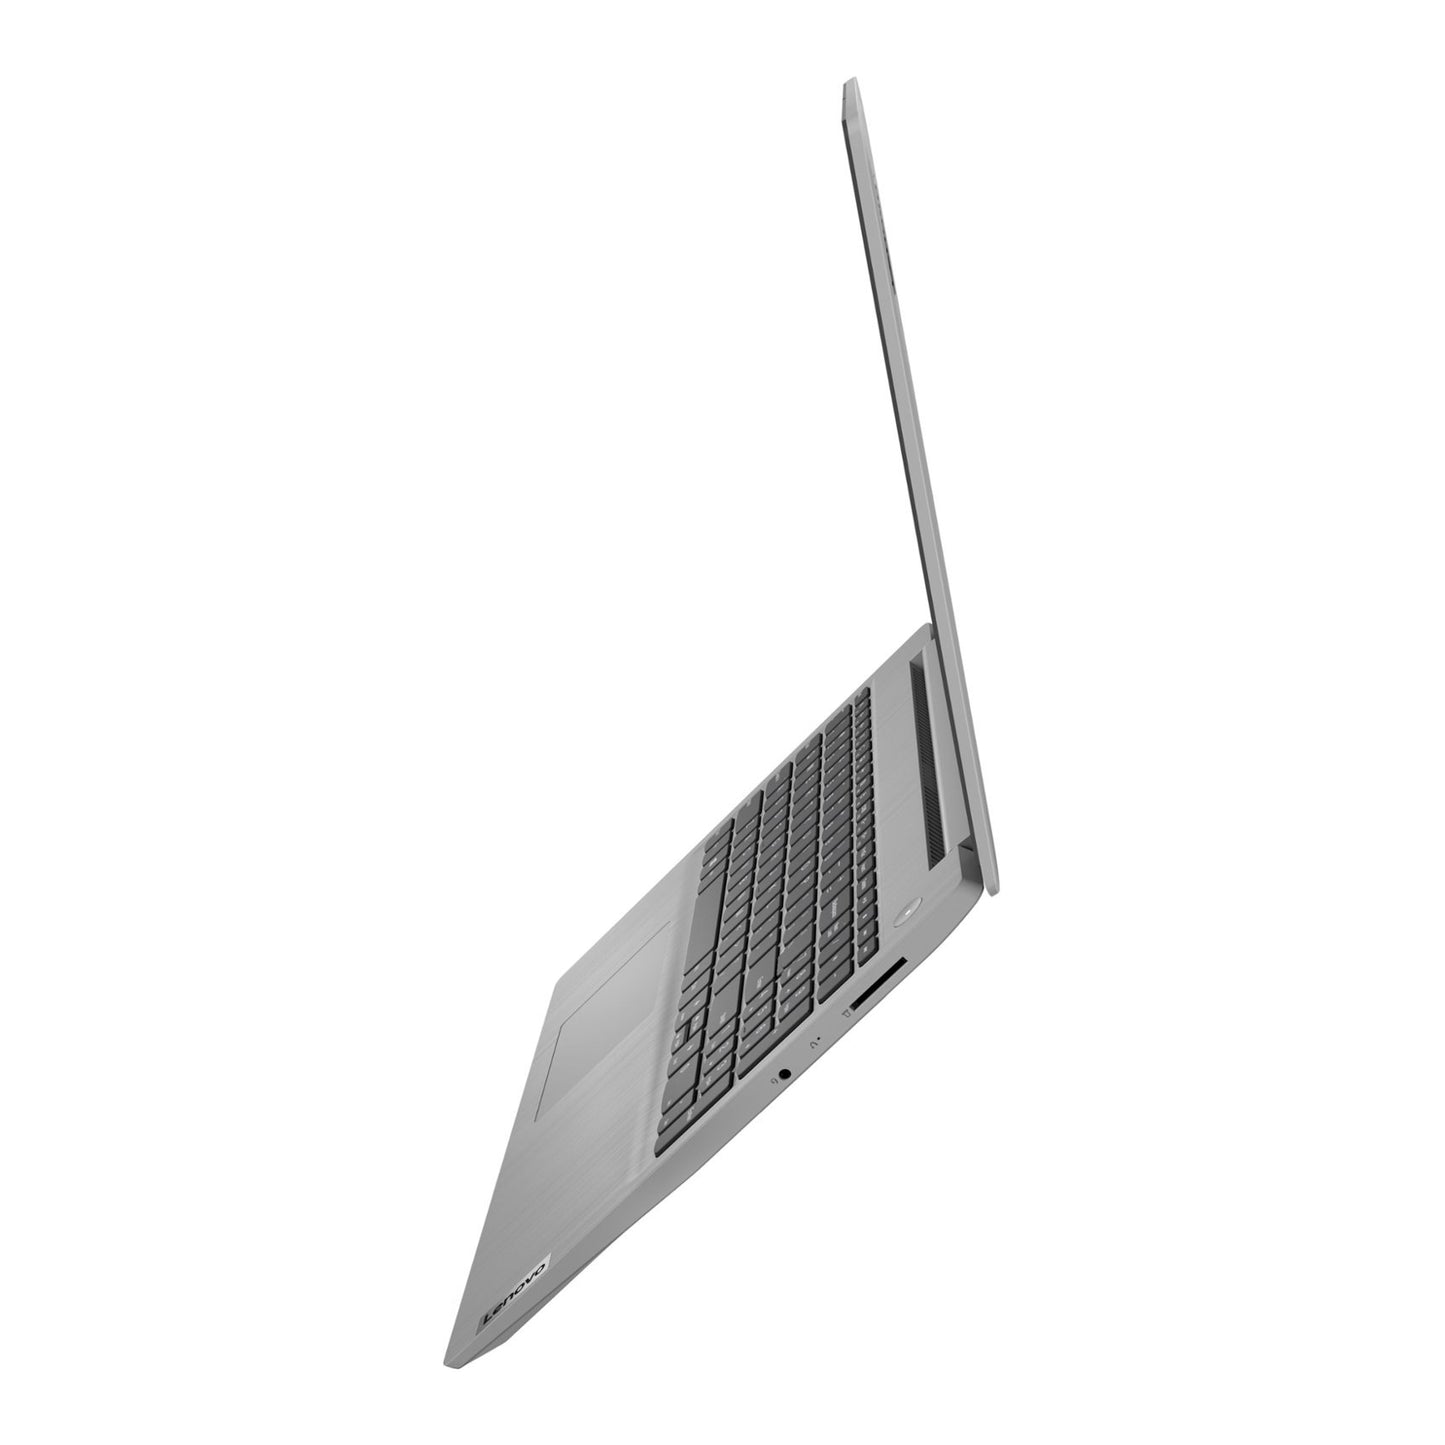 Lenovo Ideapad 3i 81X800MCUS Core i3-1115g4 Touch Laptops (Brand New)